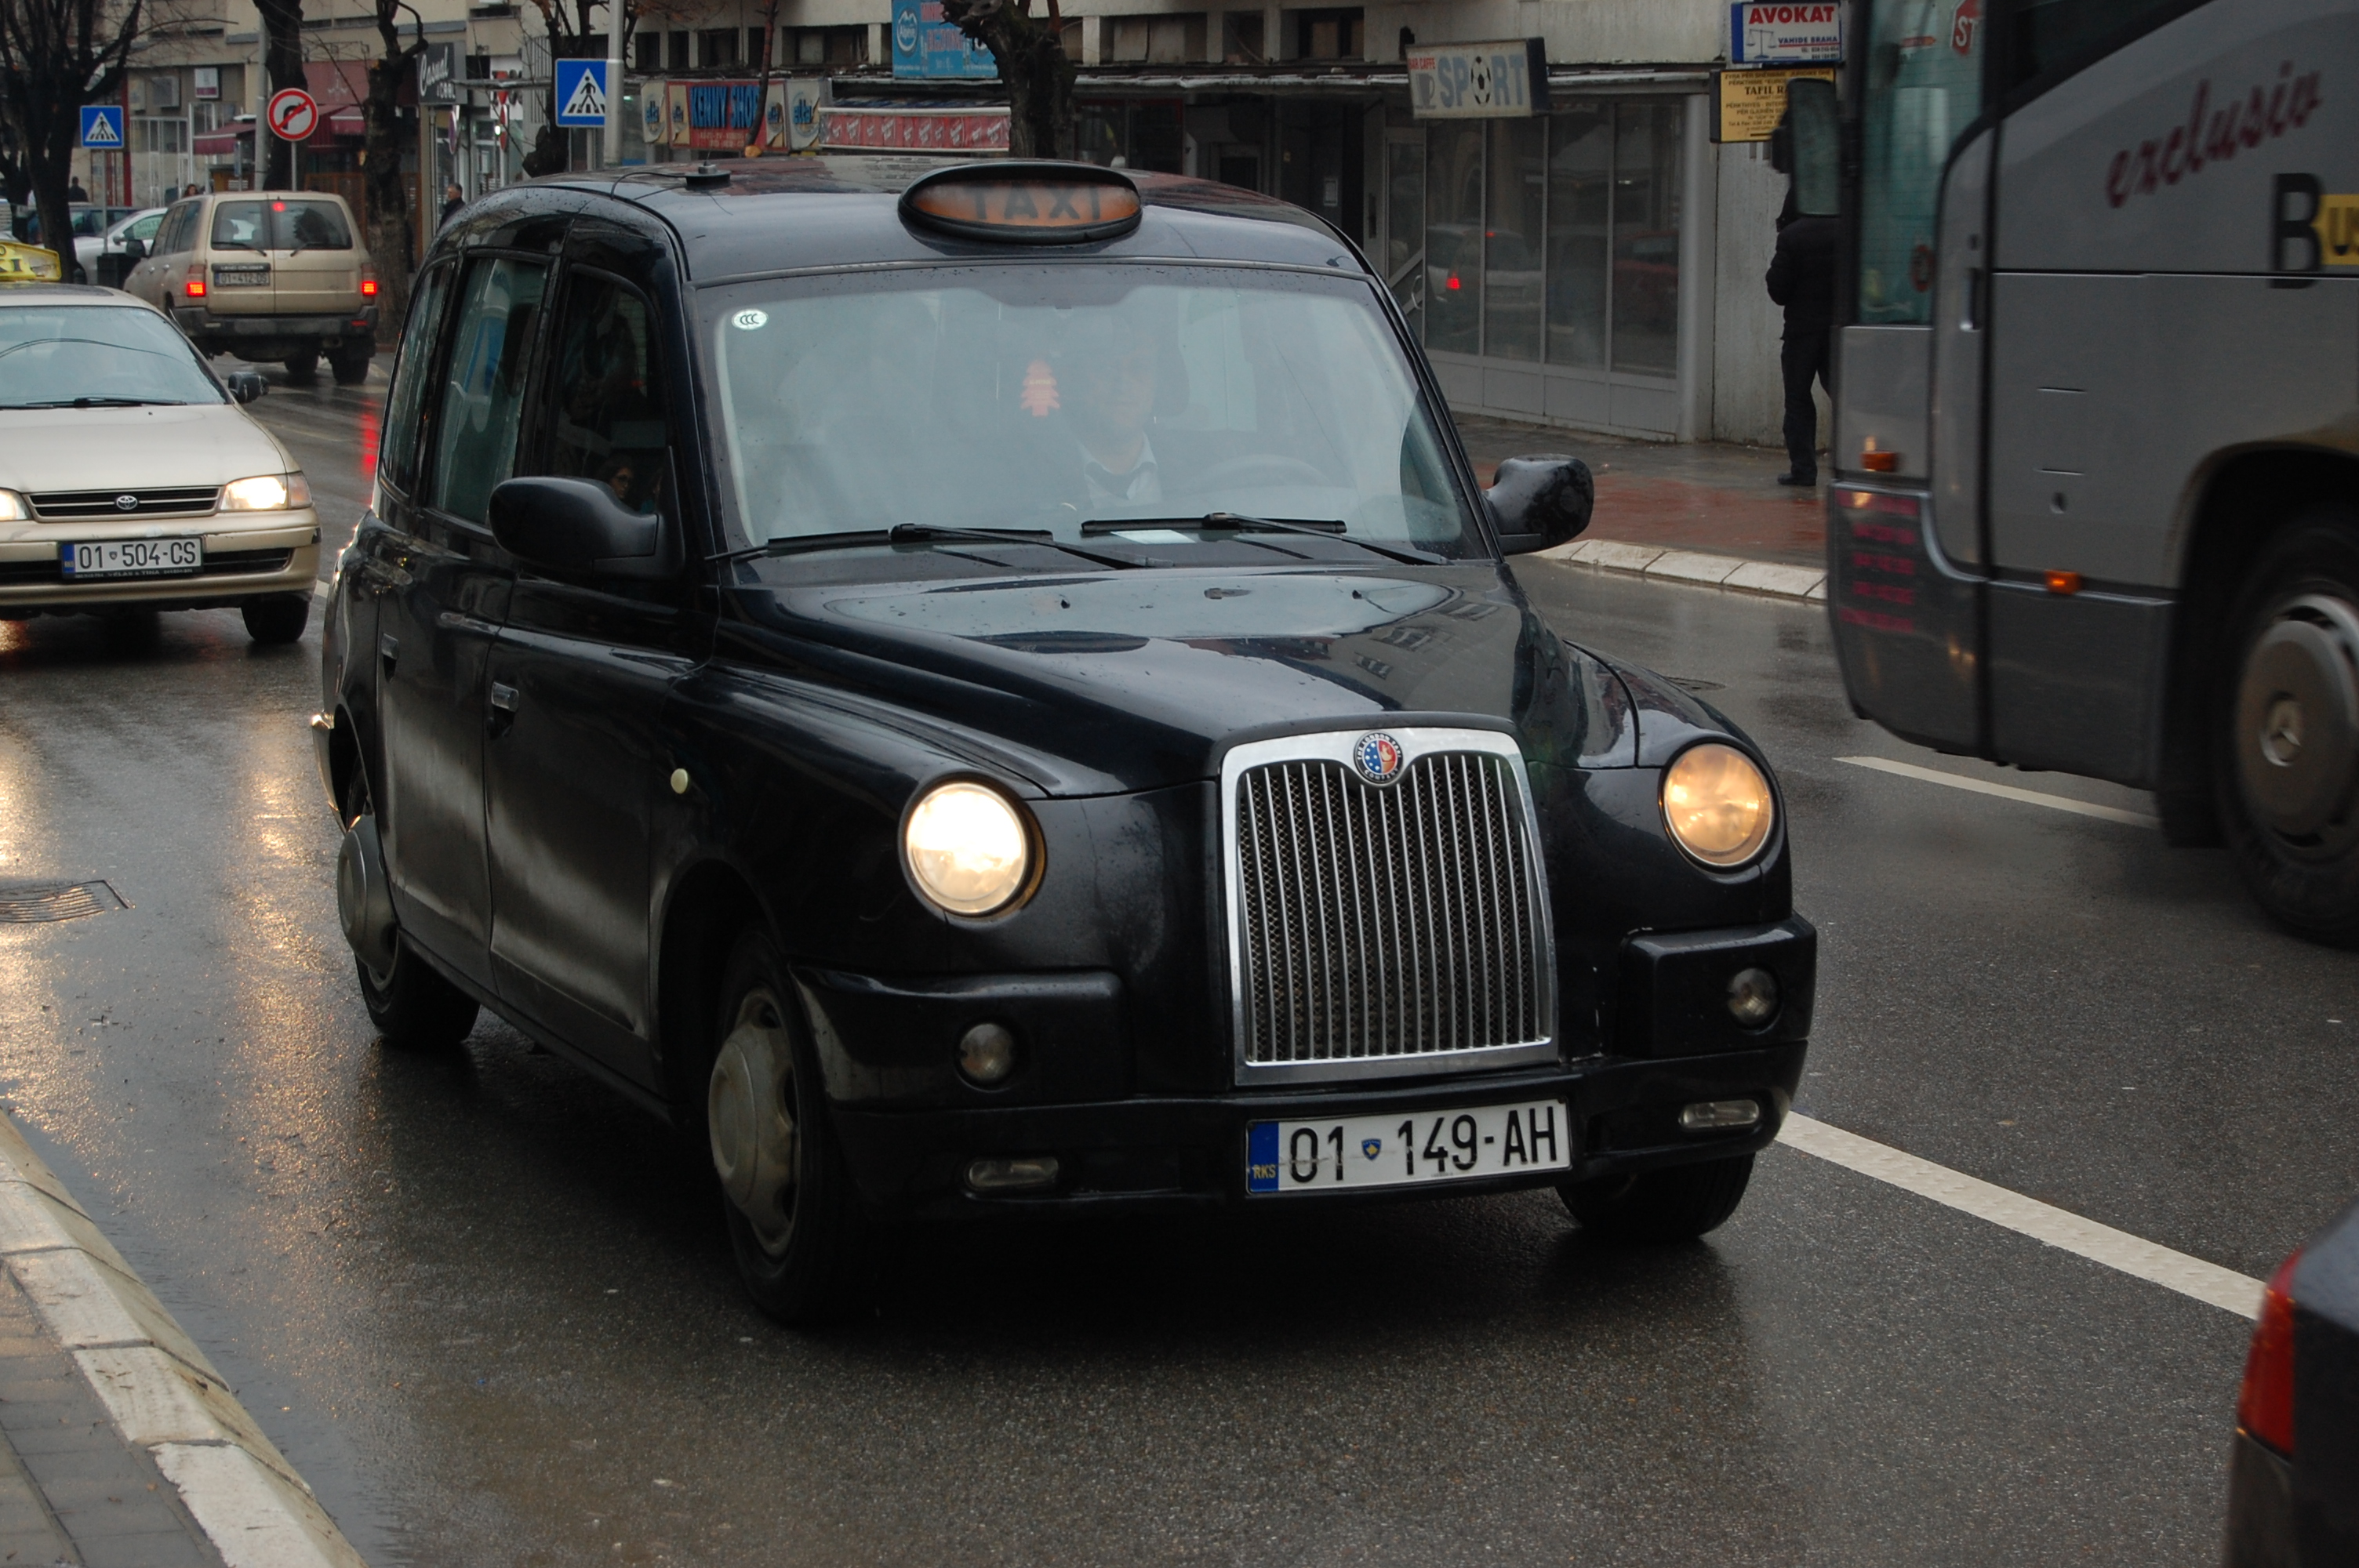 Black_taxi_cab_01_149-AH_in_Pristina.JPG